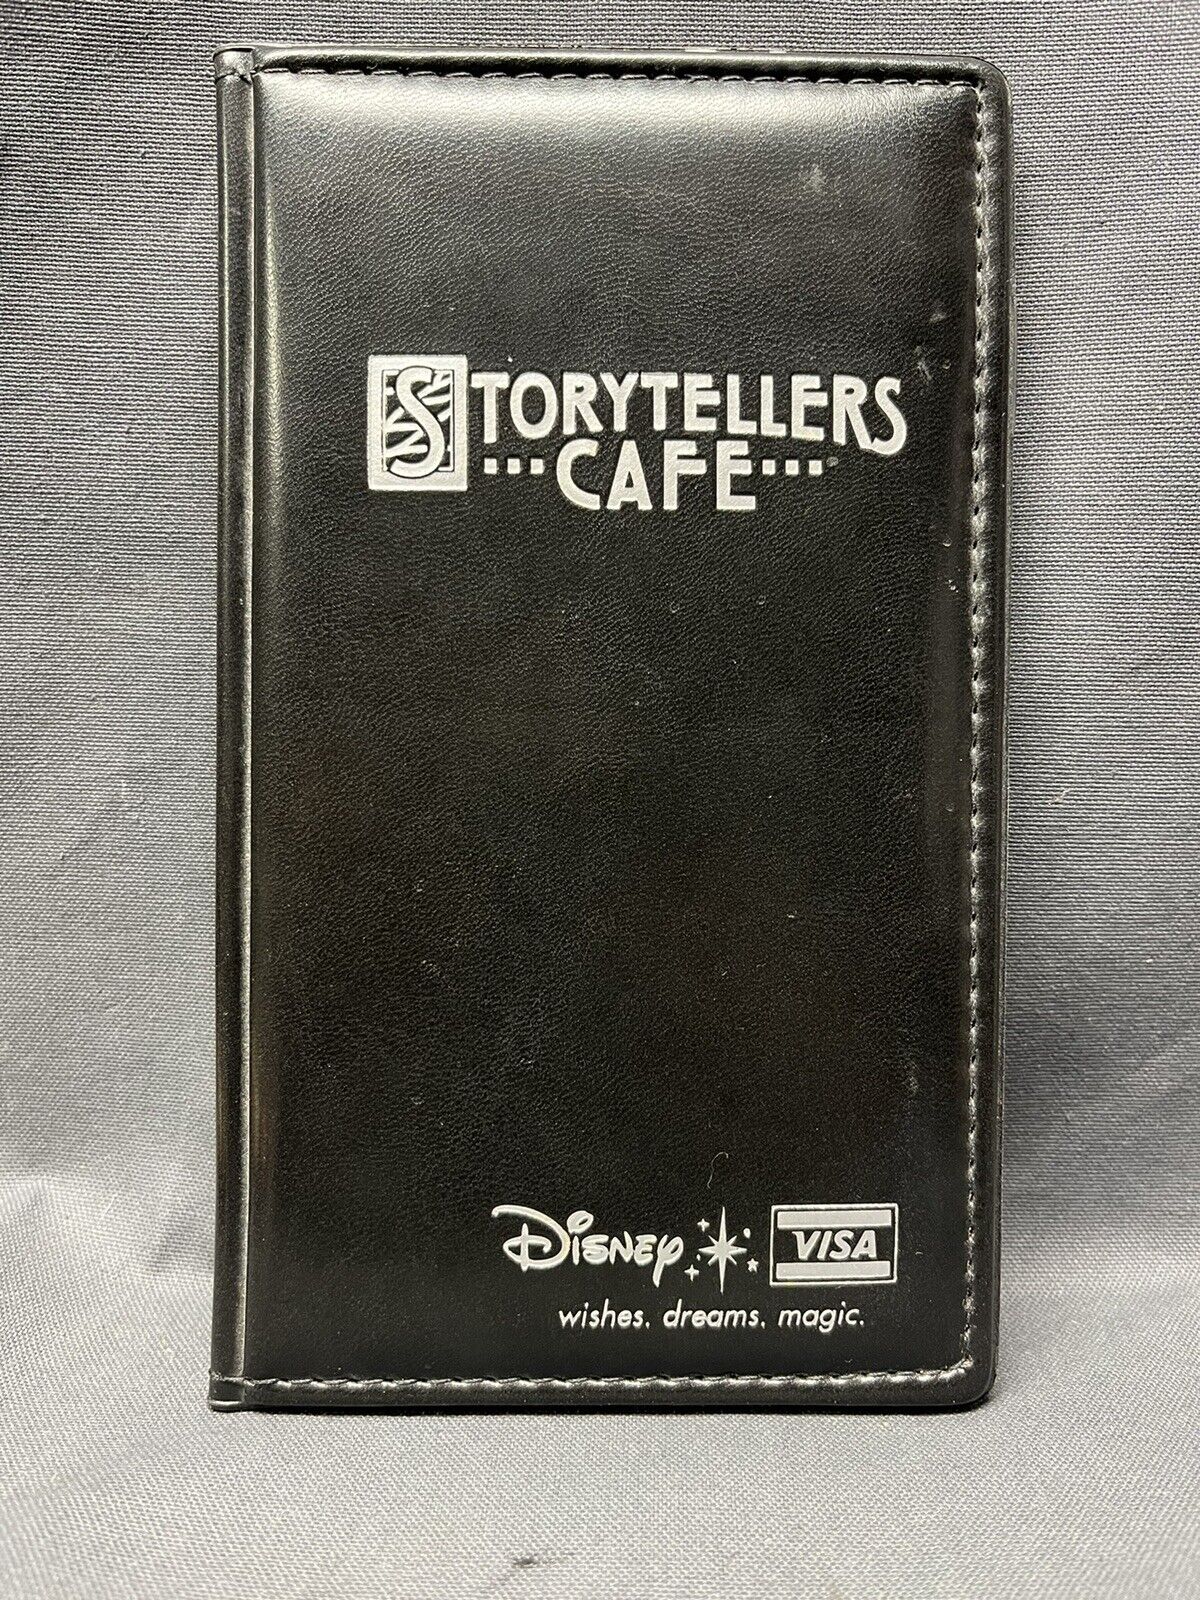 WDL Storytellers Cafe Check Presented/ Waiter Wallet